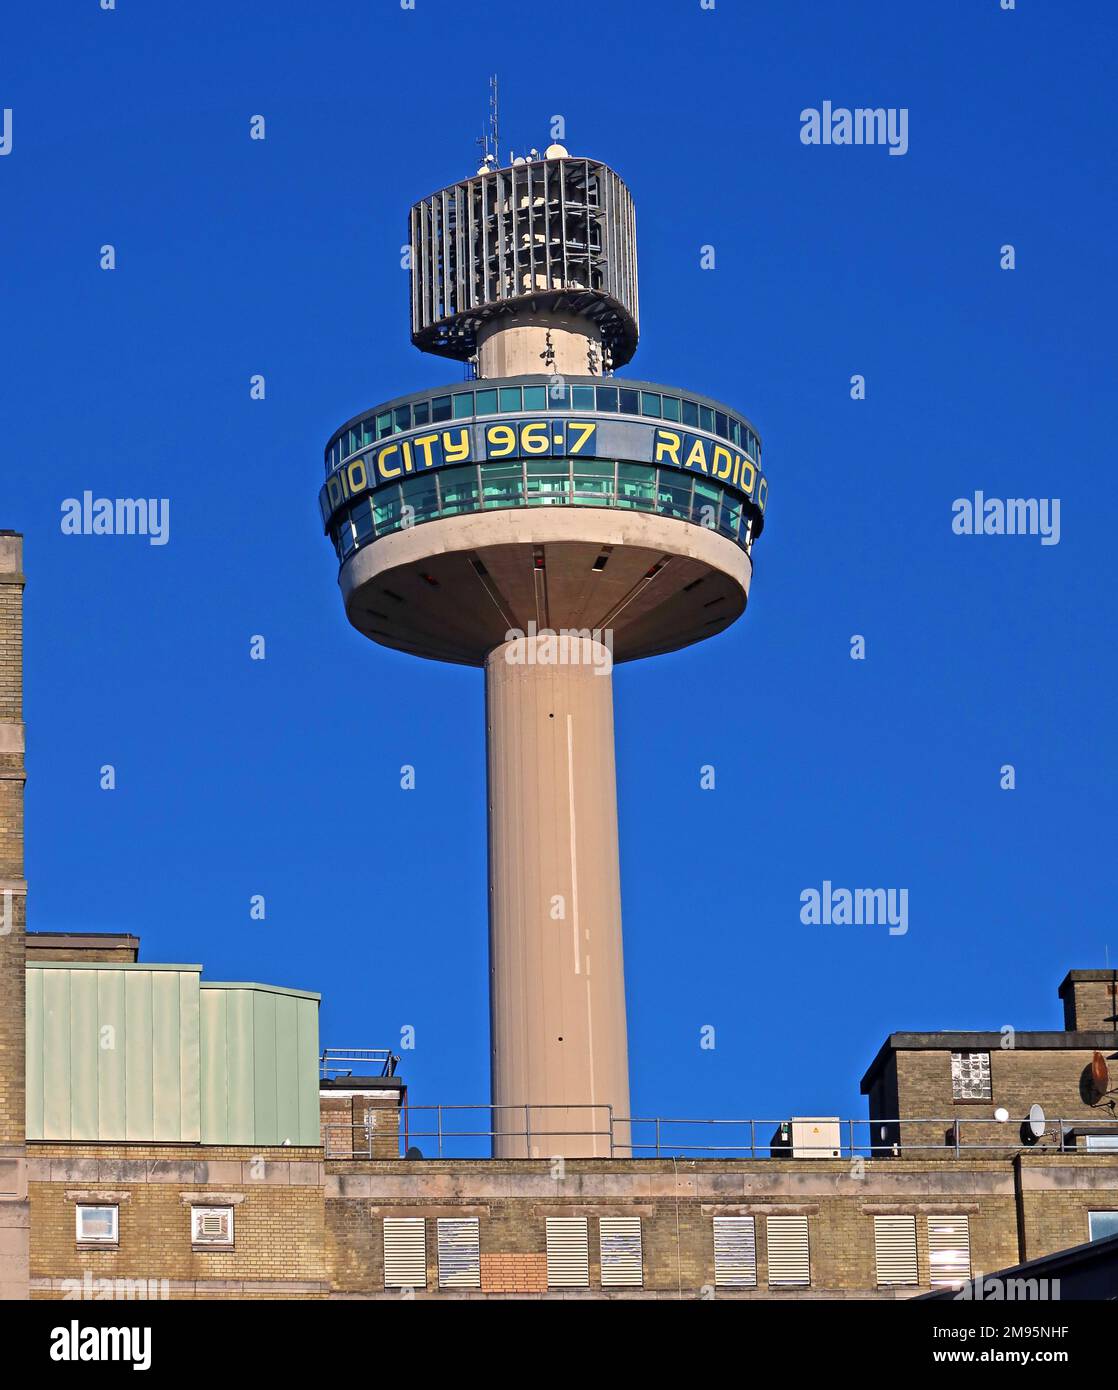 St Johns Beacon Viewing Gallery, Radio City 96,7 Tower, St Johns Beacon, 1 Houghton St, Liverpool, Merseyside, ENGLAND, GROSSBRITANNIEN, L1 1RL Stockfoto